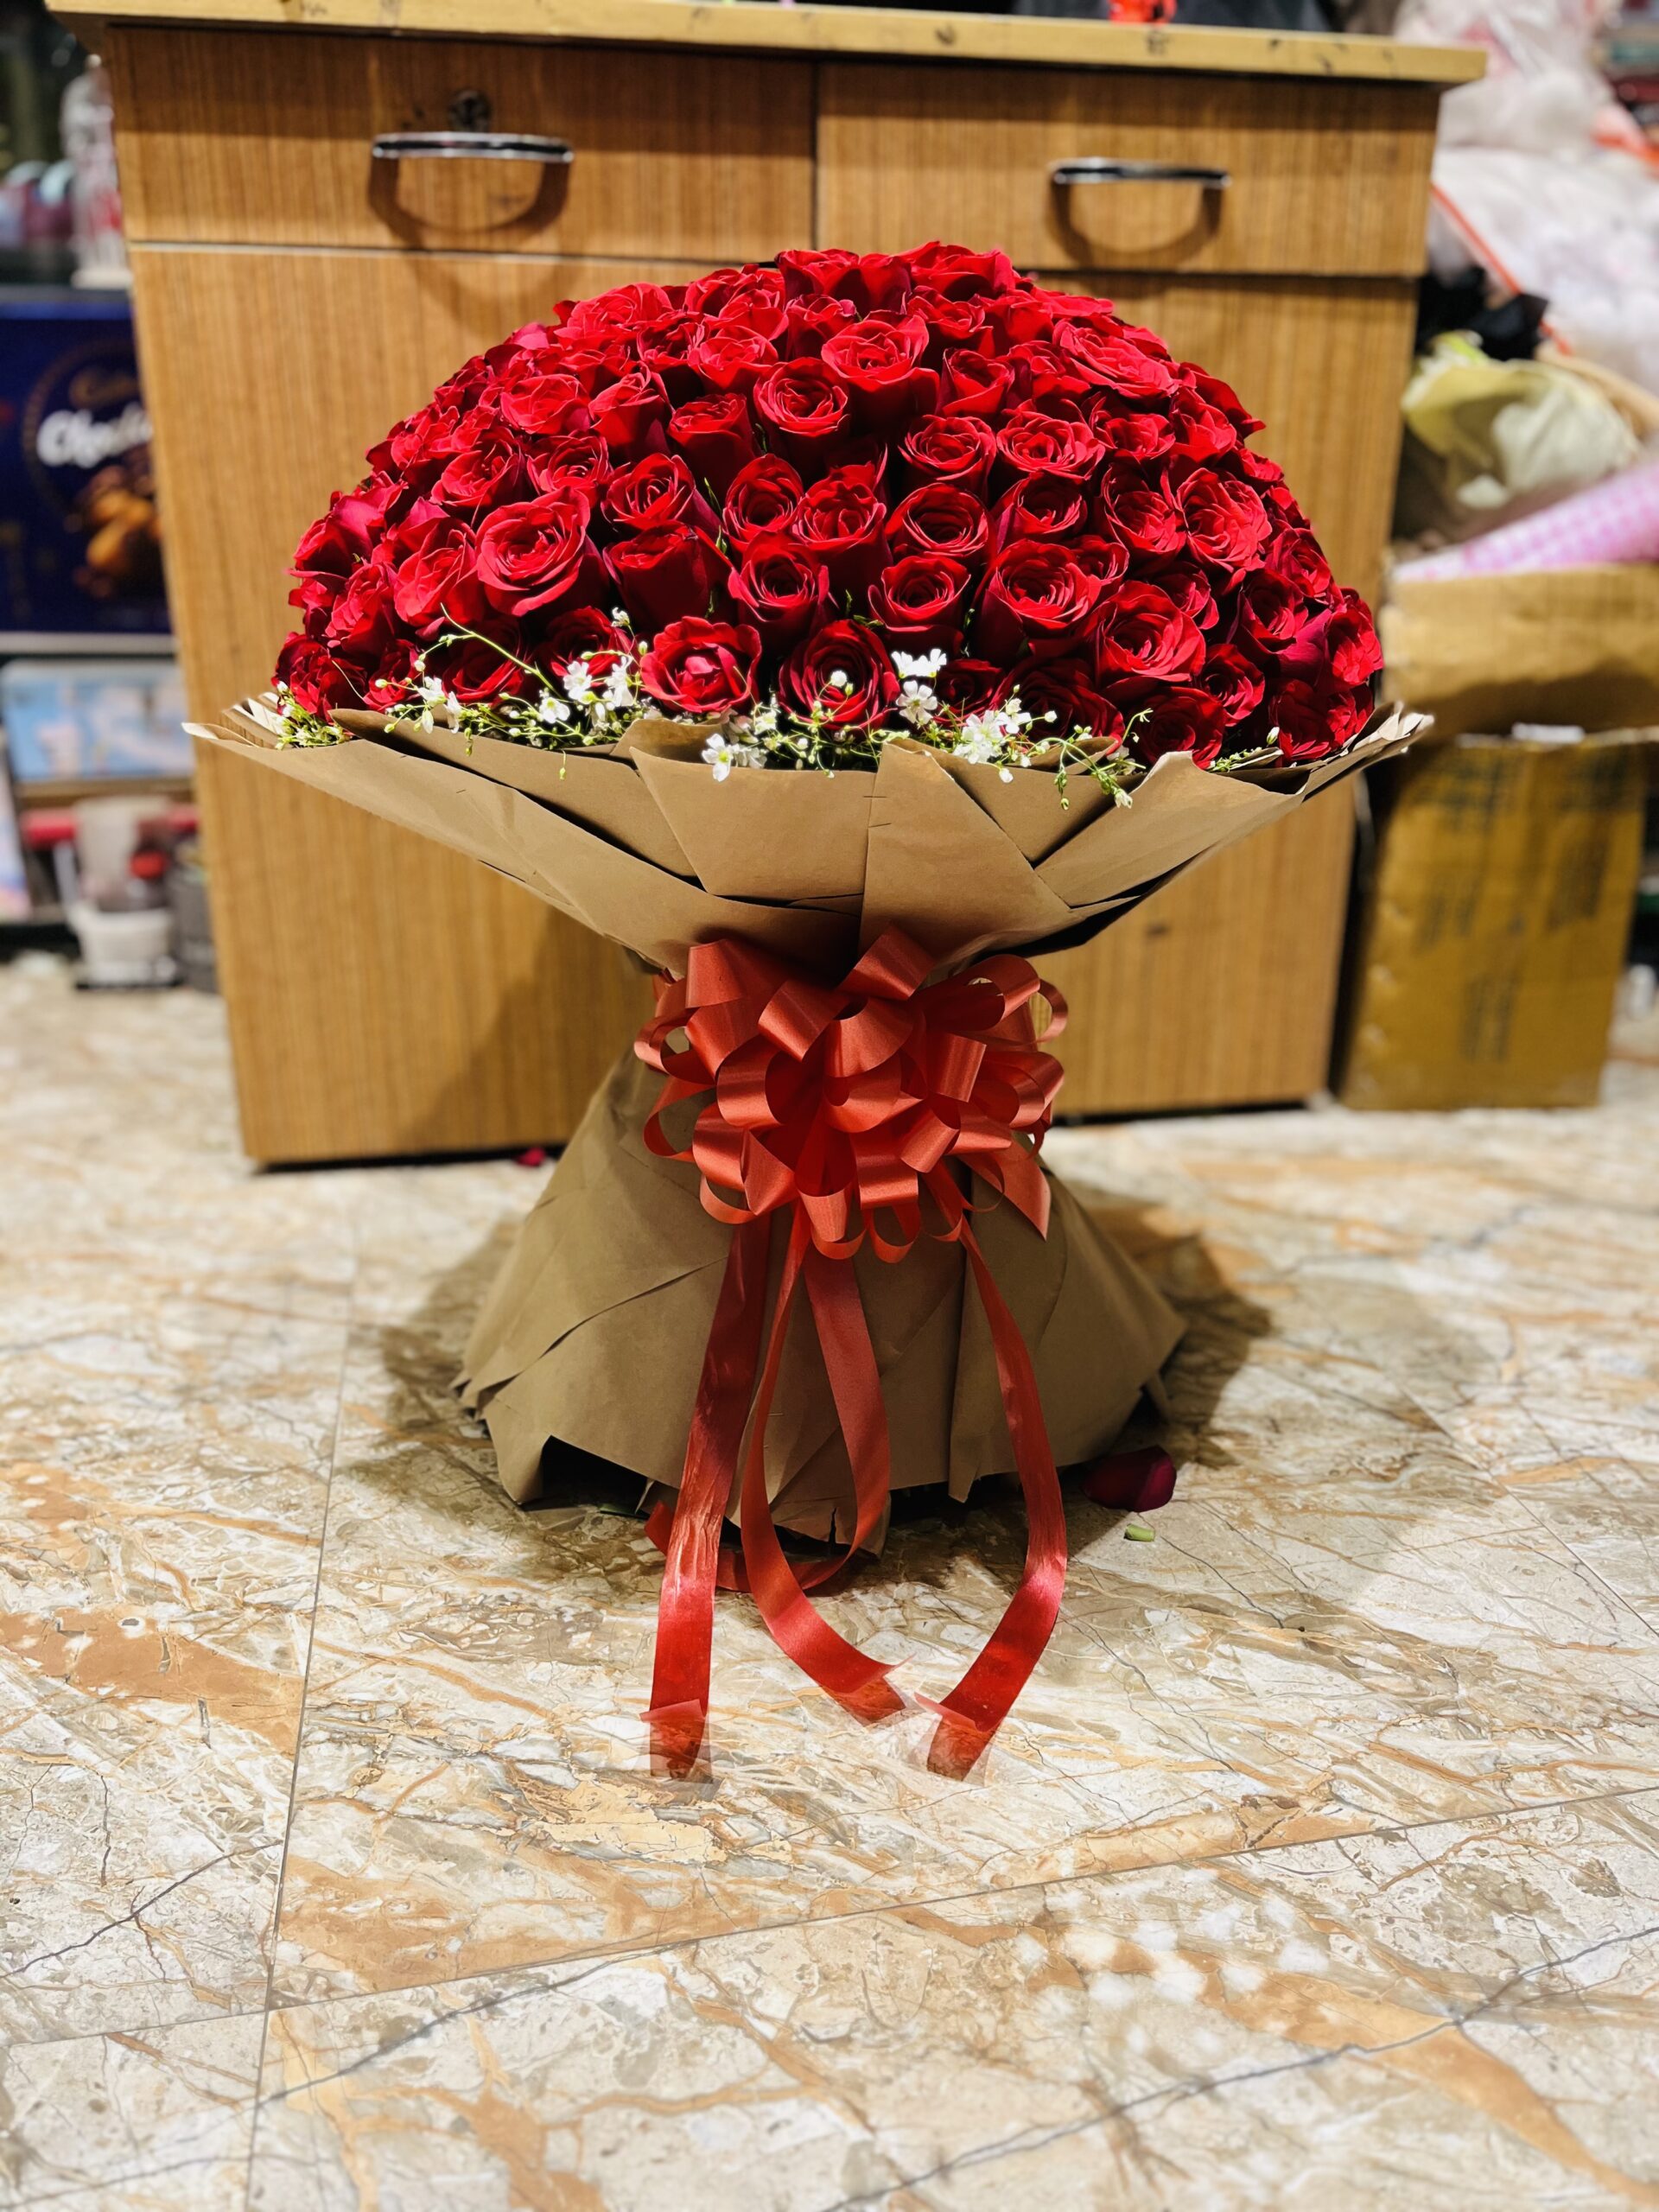 200 roses ! #flowers #florist #inlandempire #gift #mothersday #love #roses  | Instagram